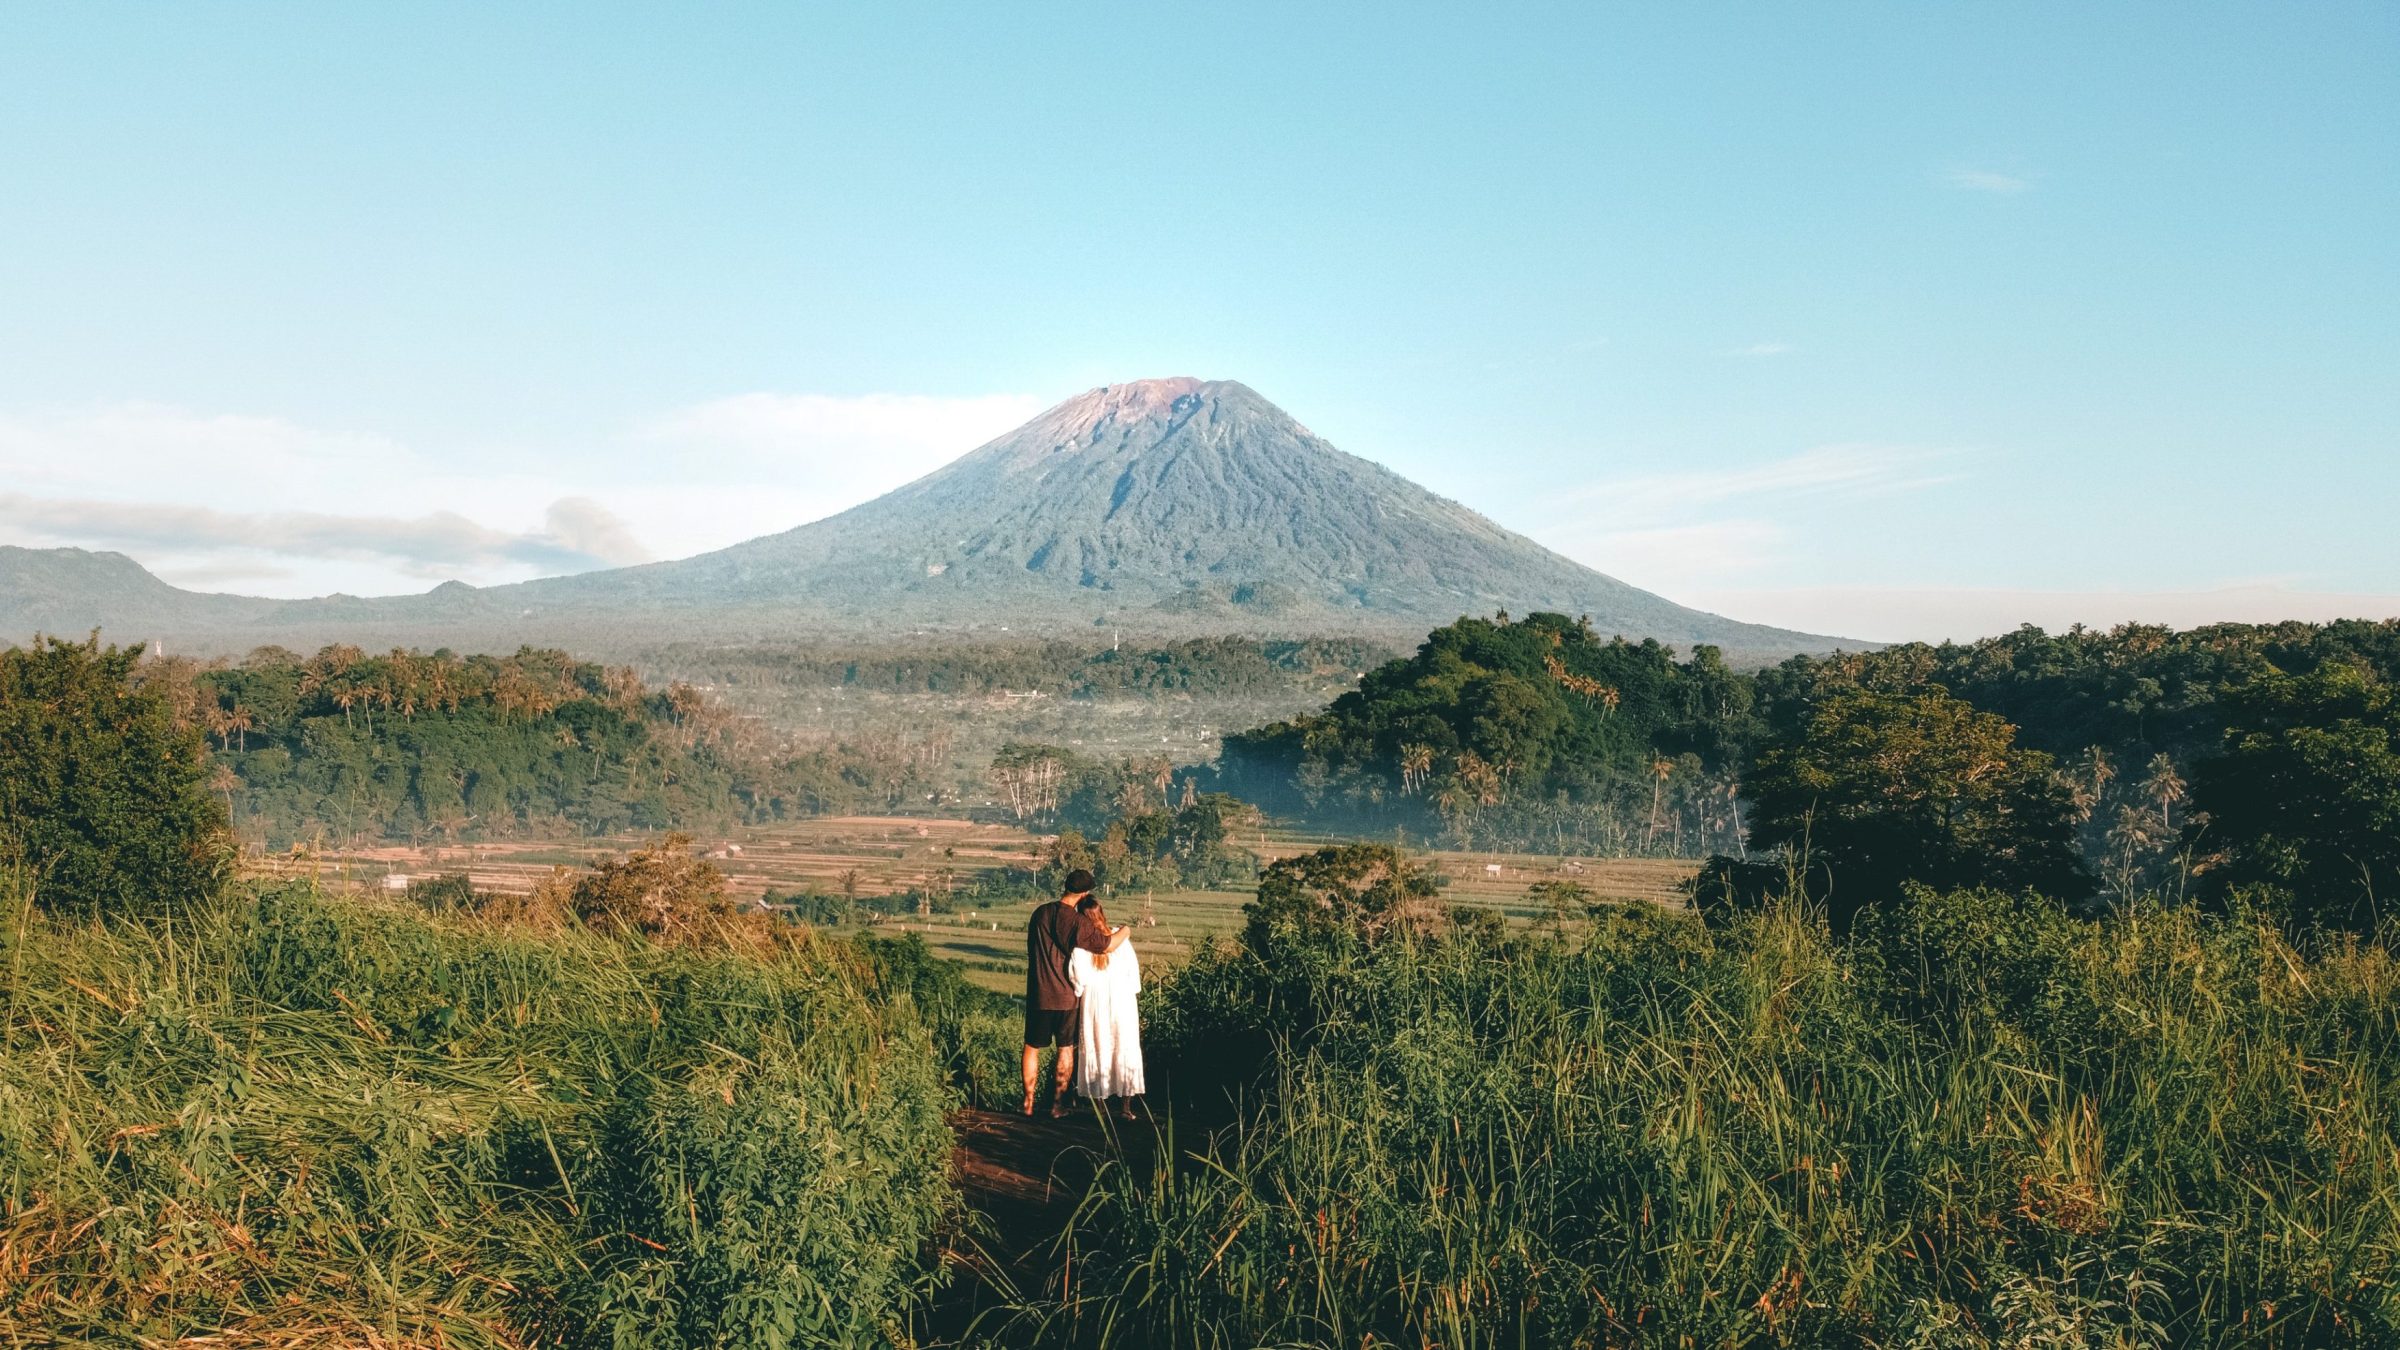 Bukut Cinta Mount Agung Bali | reisroute bali | Wereldreizigers.nl